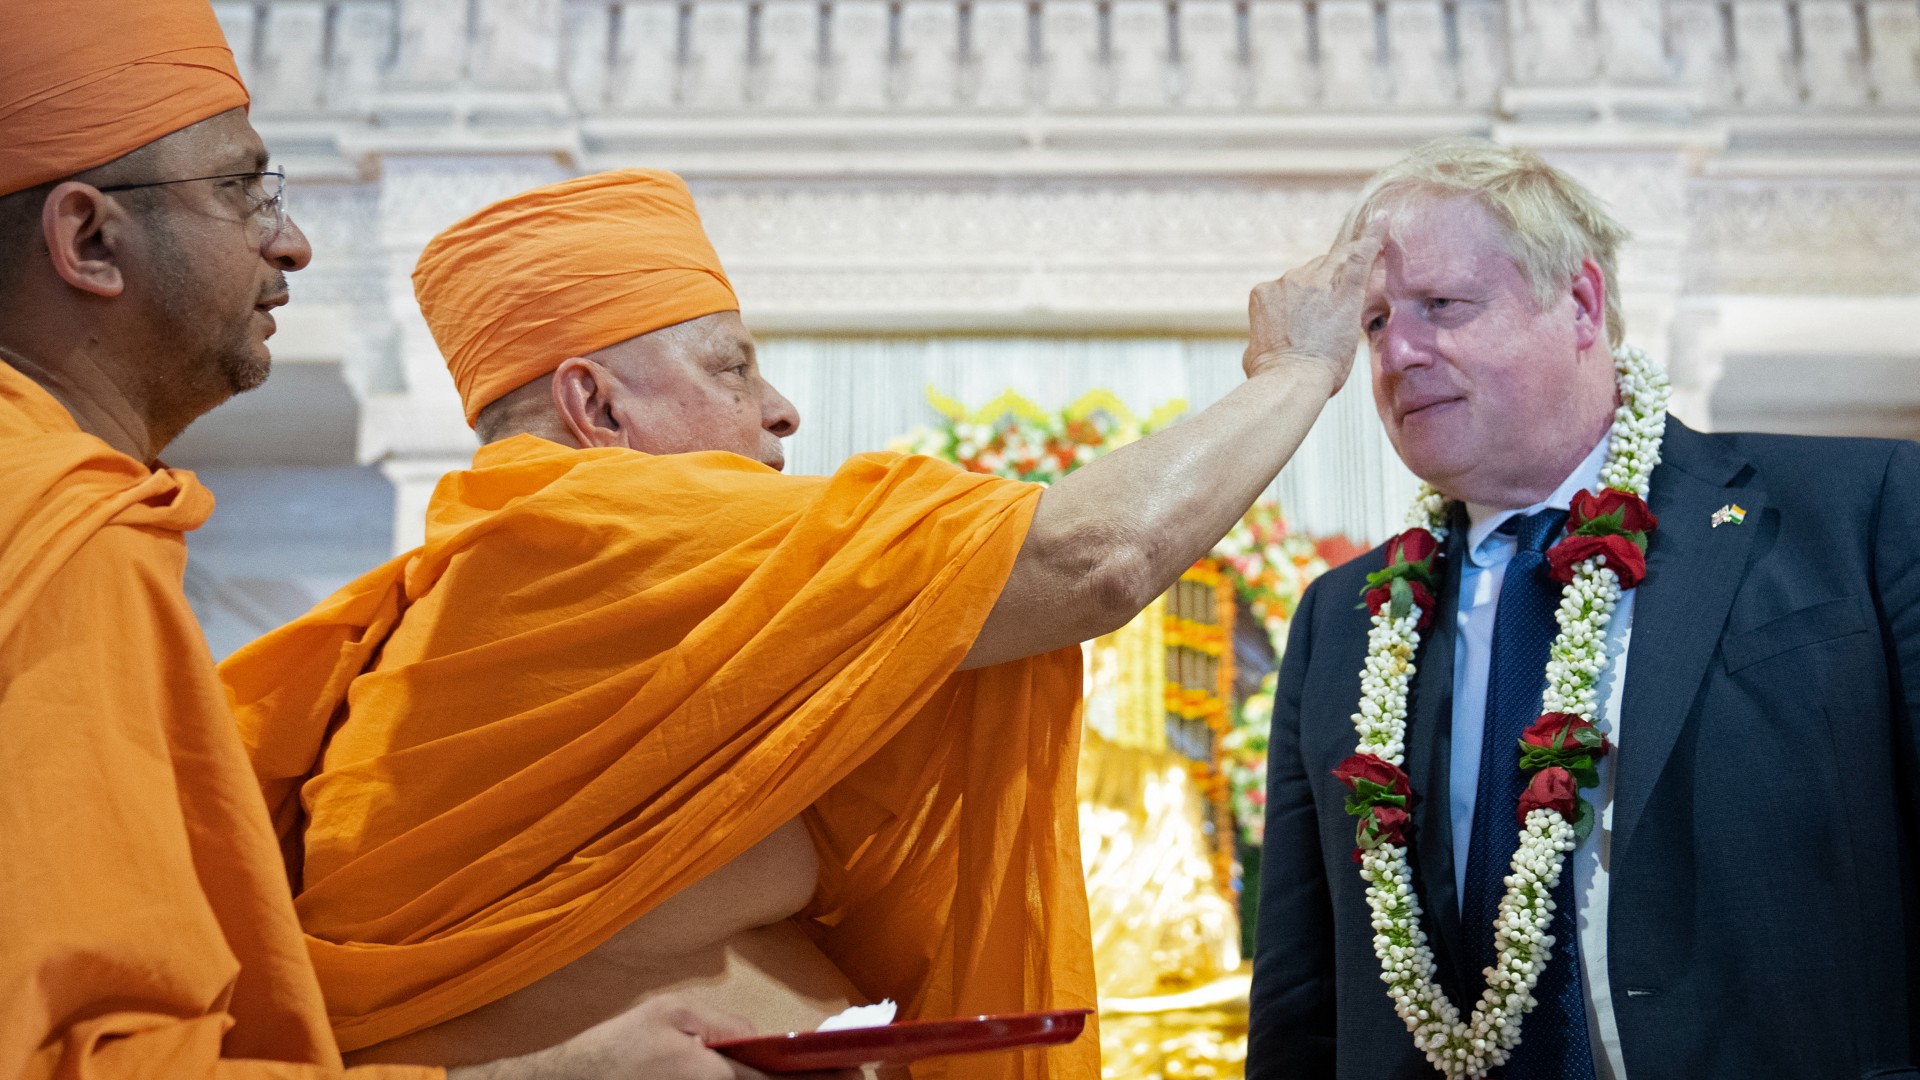  Hindu holyman puts a traditional 'tilak' on the forehead of Britain's Prime Minister Boris Johnson (2R) during his visit at the Swaminarayan Akshardham temple in Gandhinagar